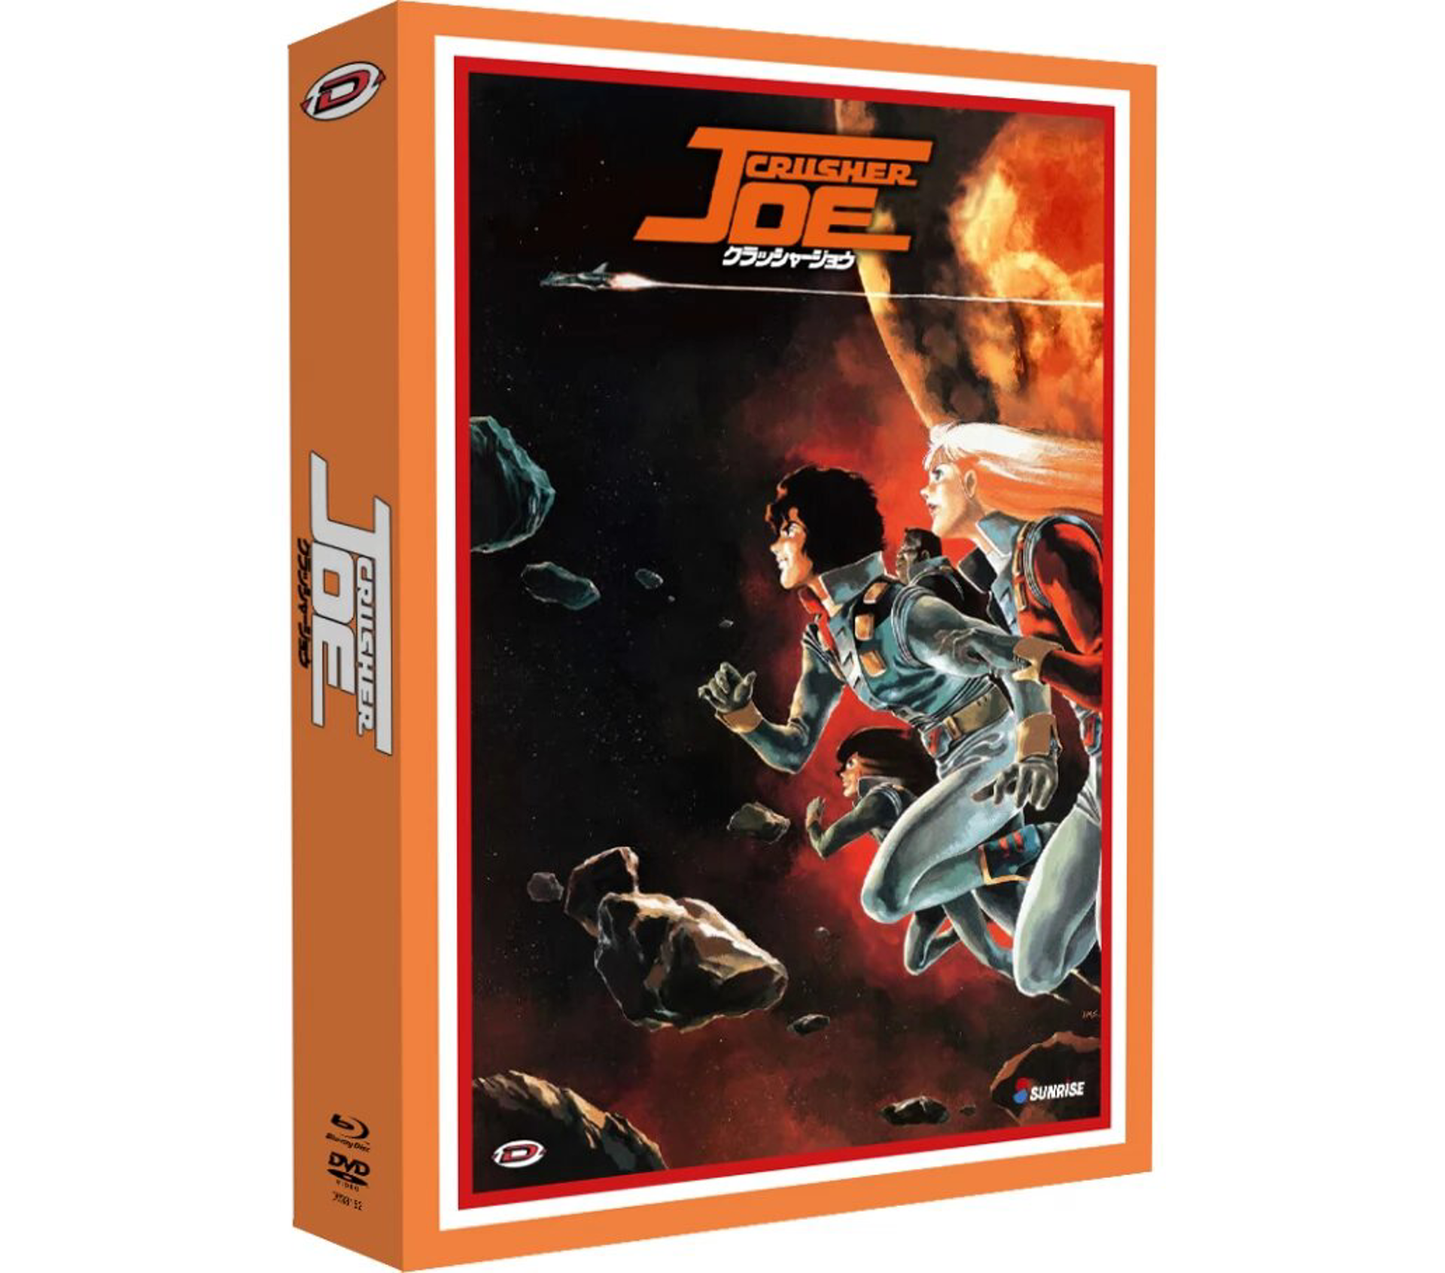 Crusher Joe - Collector's Edition - A4 Combo Blu-ray + DVD box set